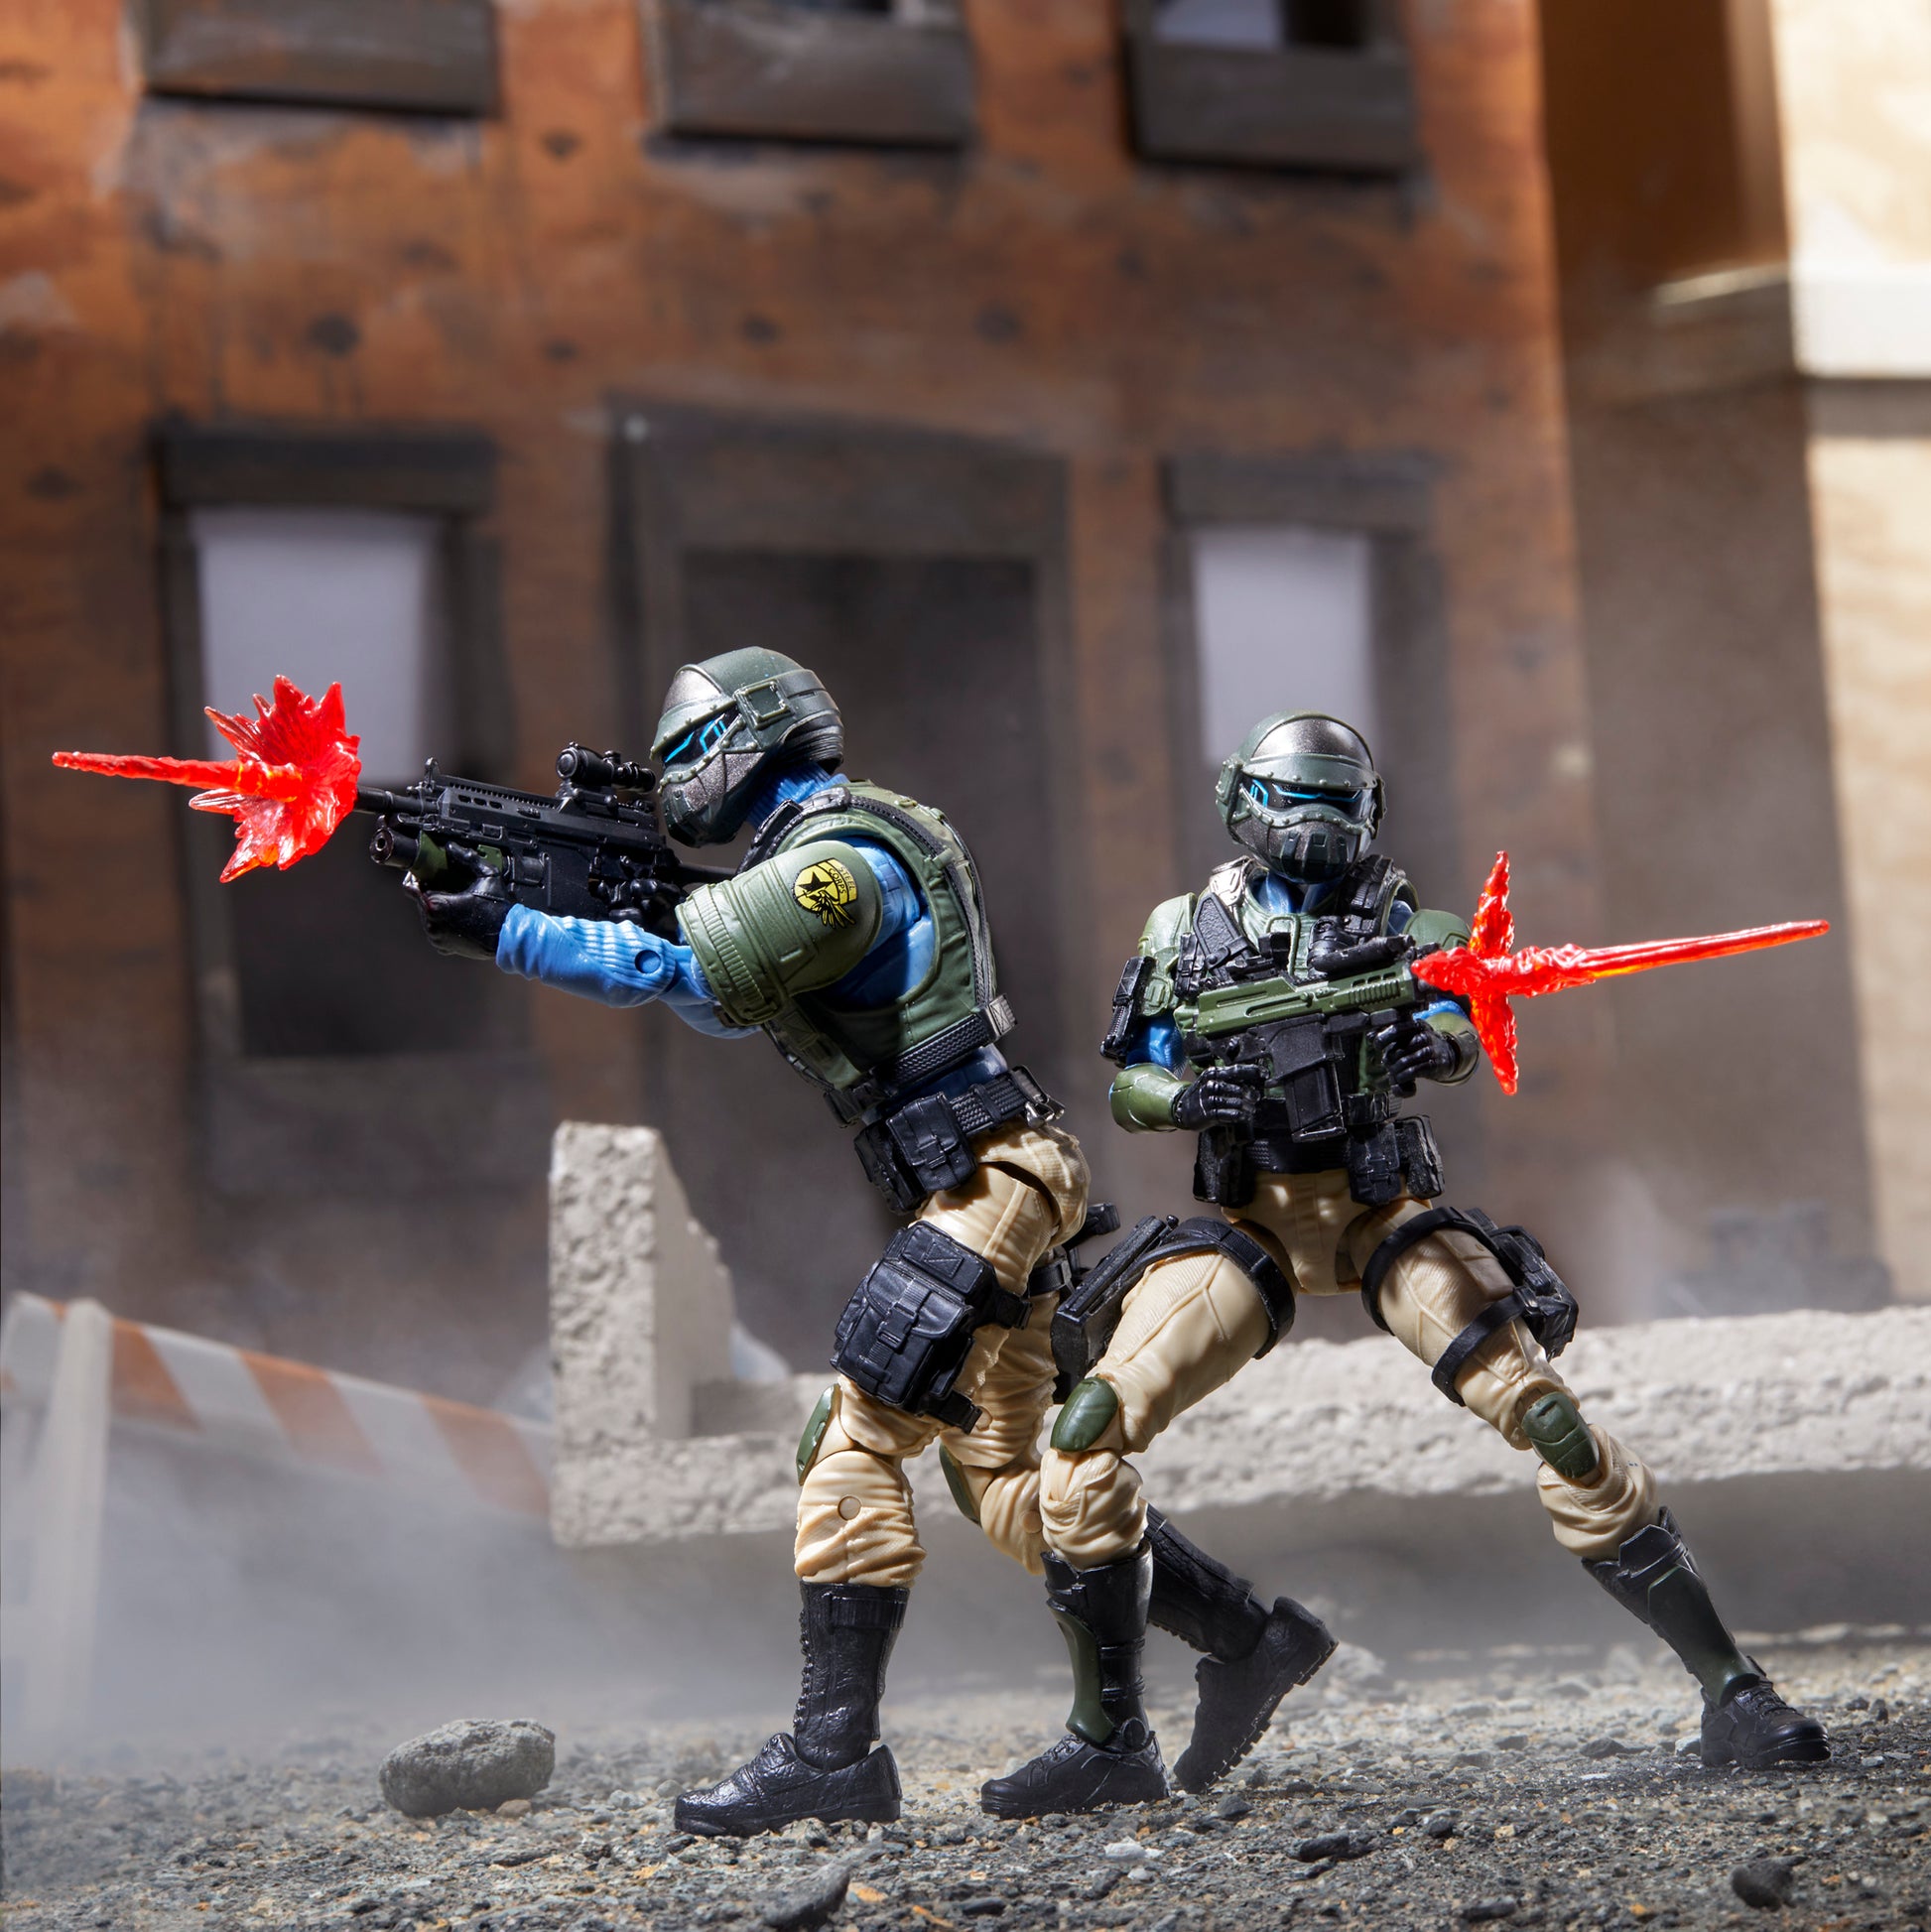 G.I. Joe Classified Series Steel Corps Troopers firing with guns - Heretoserveyou